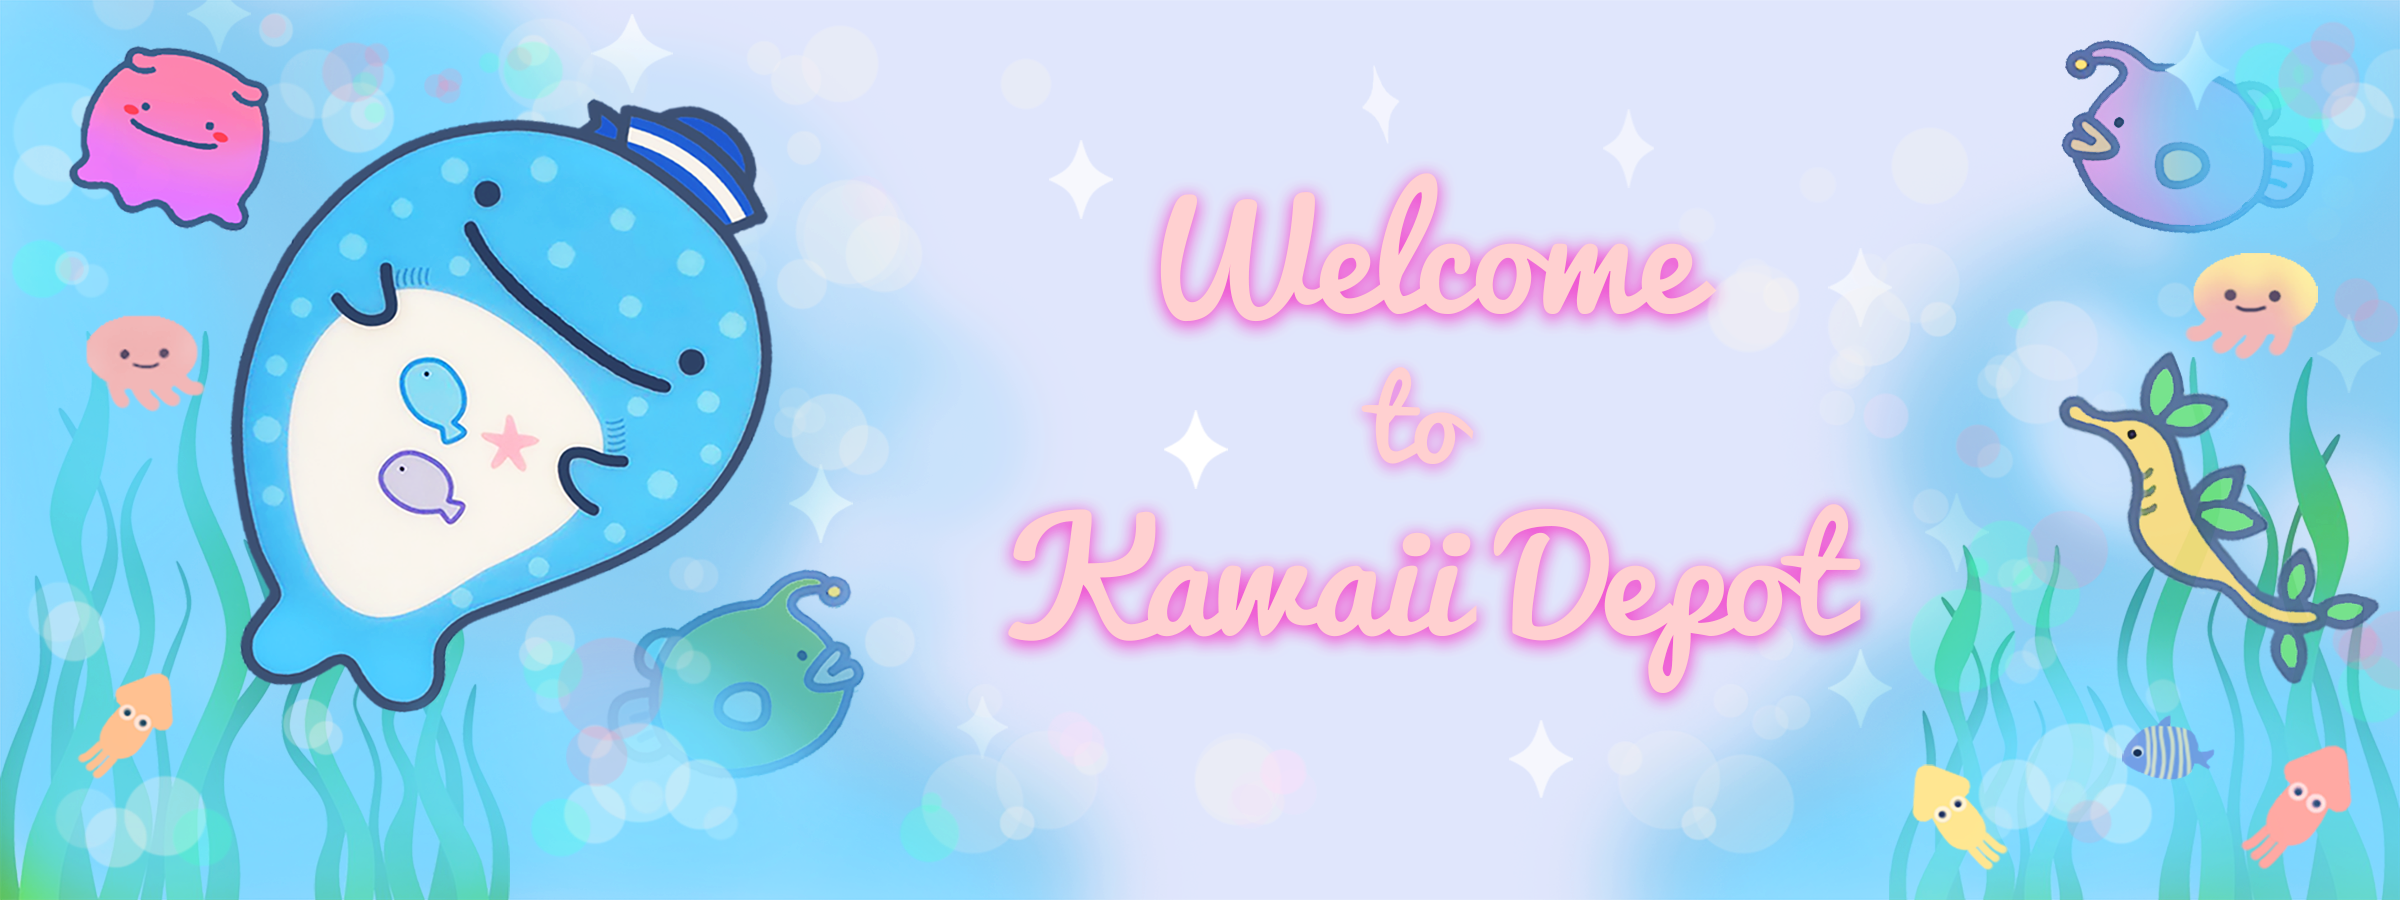 Welcome to Kawaii Depot